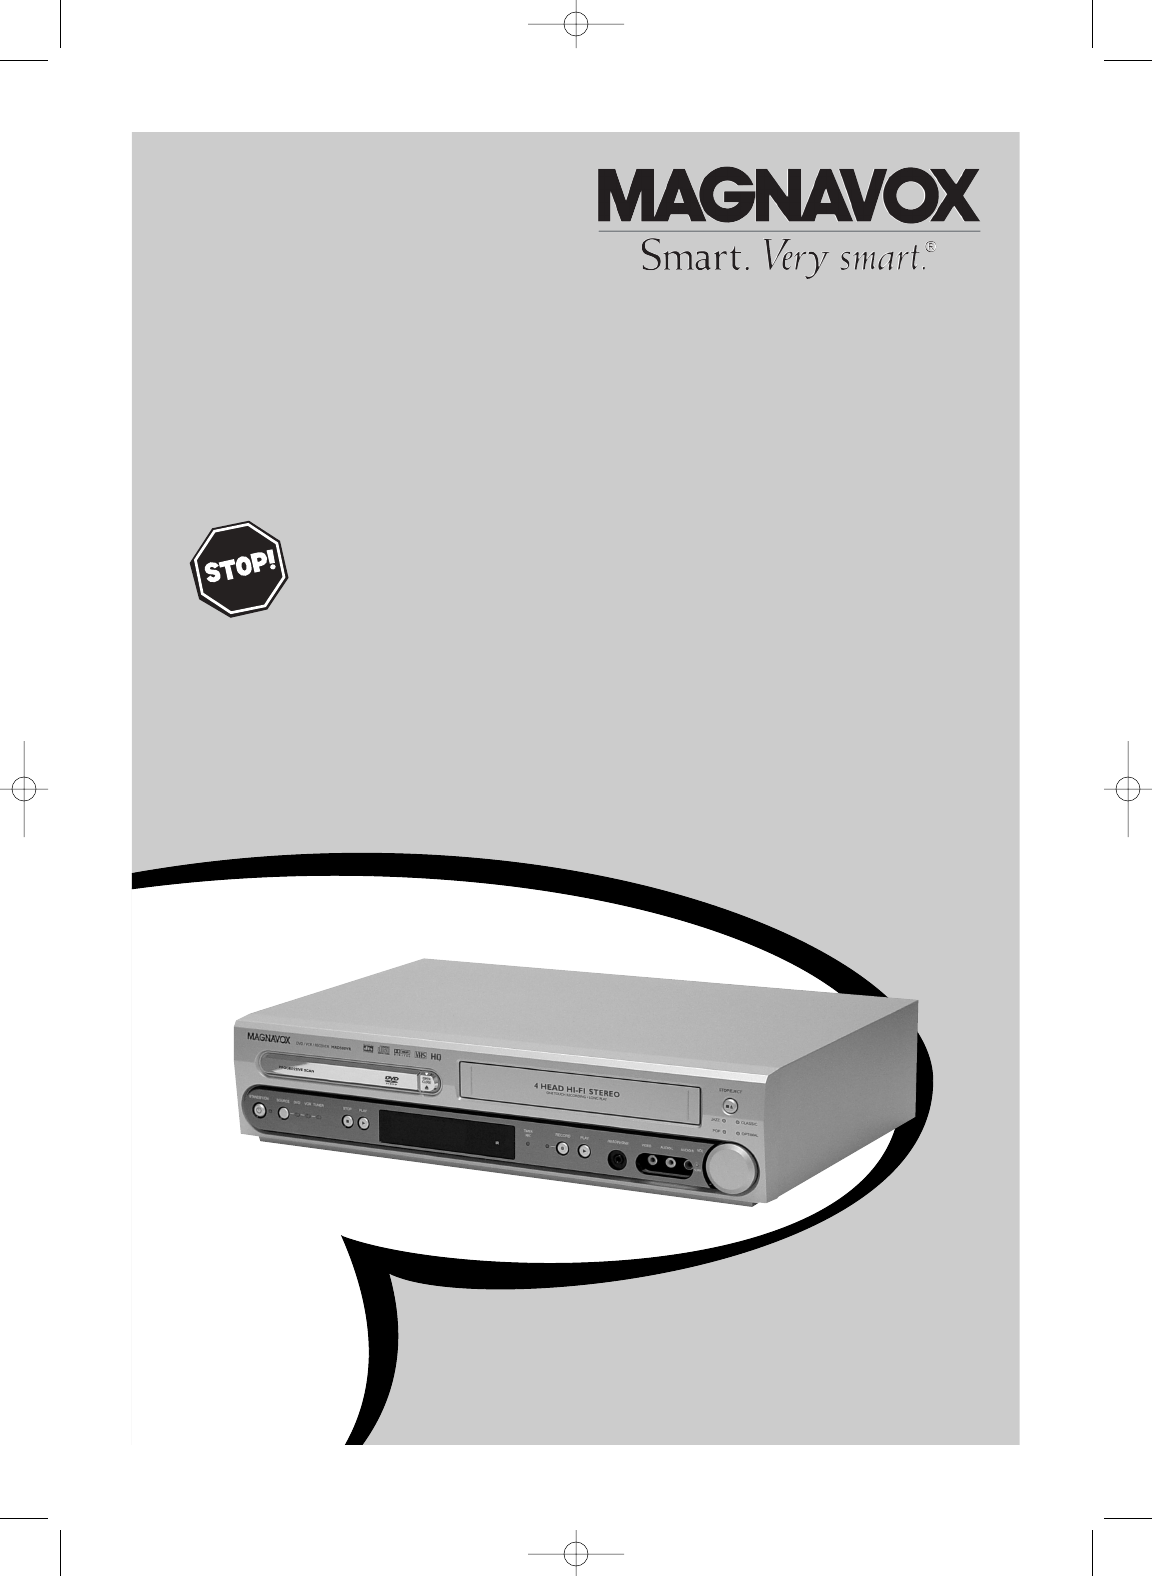 Magnavox dvd recorder user manual